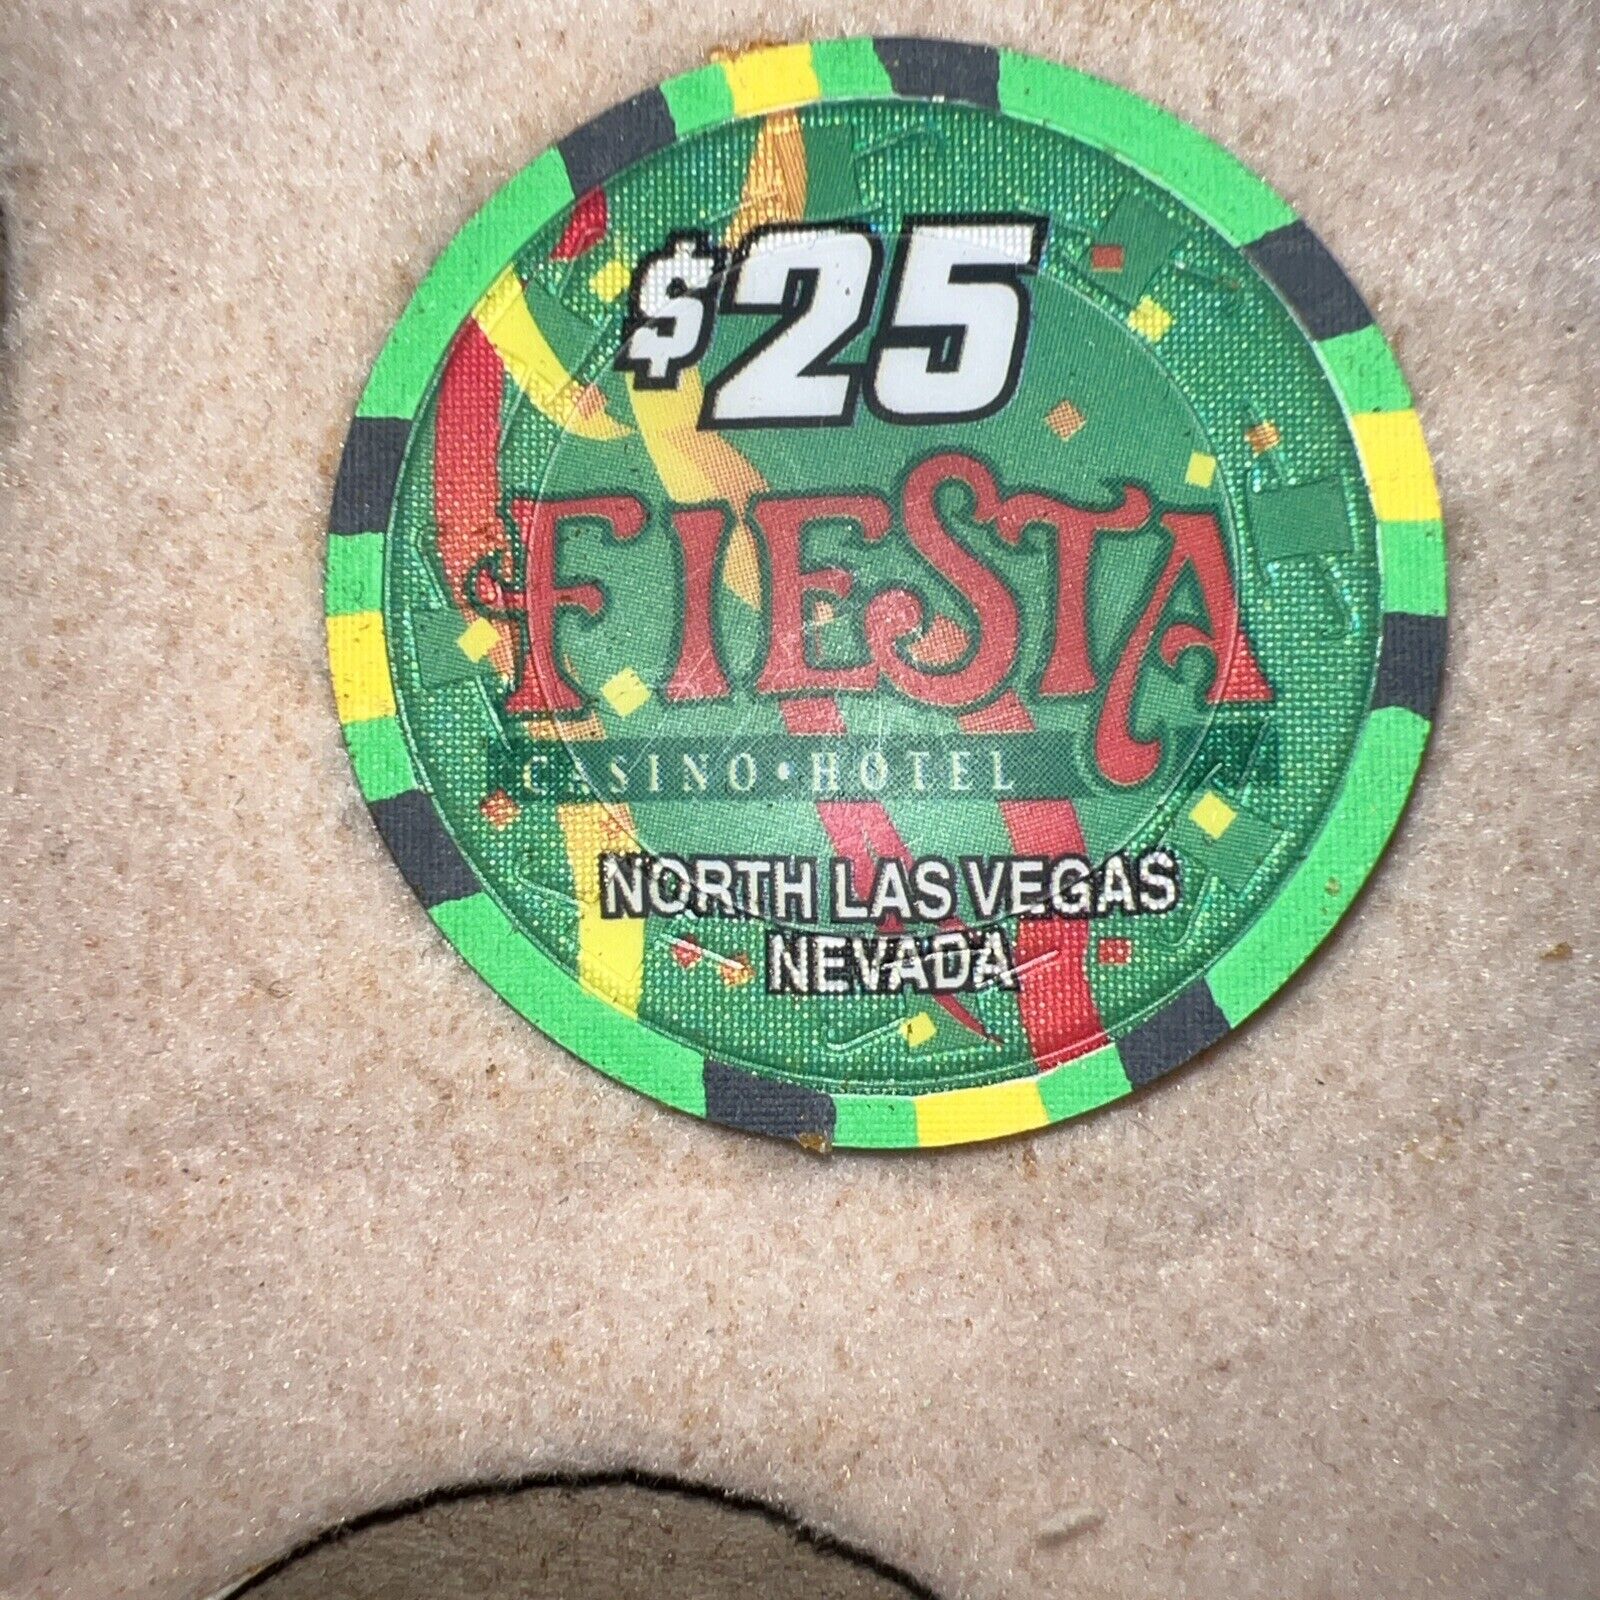 $25 Fiesta Casino Las Vegas Nevada  casino chip - super rare